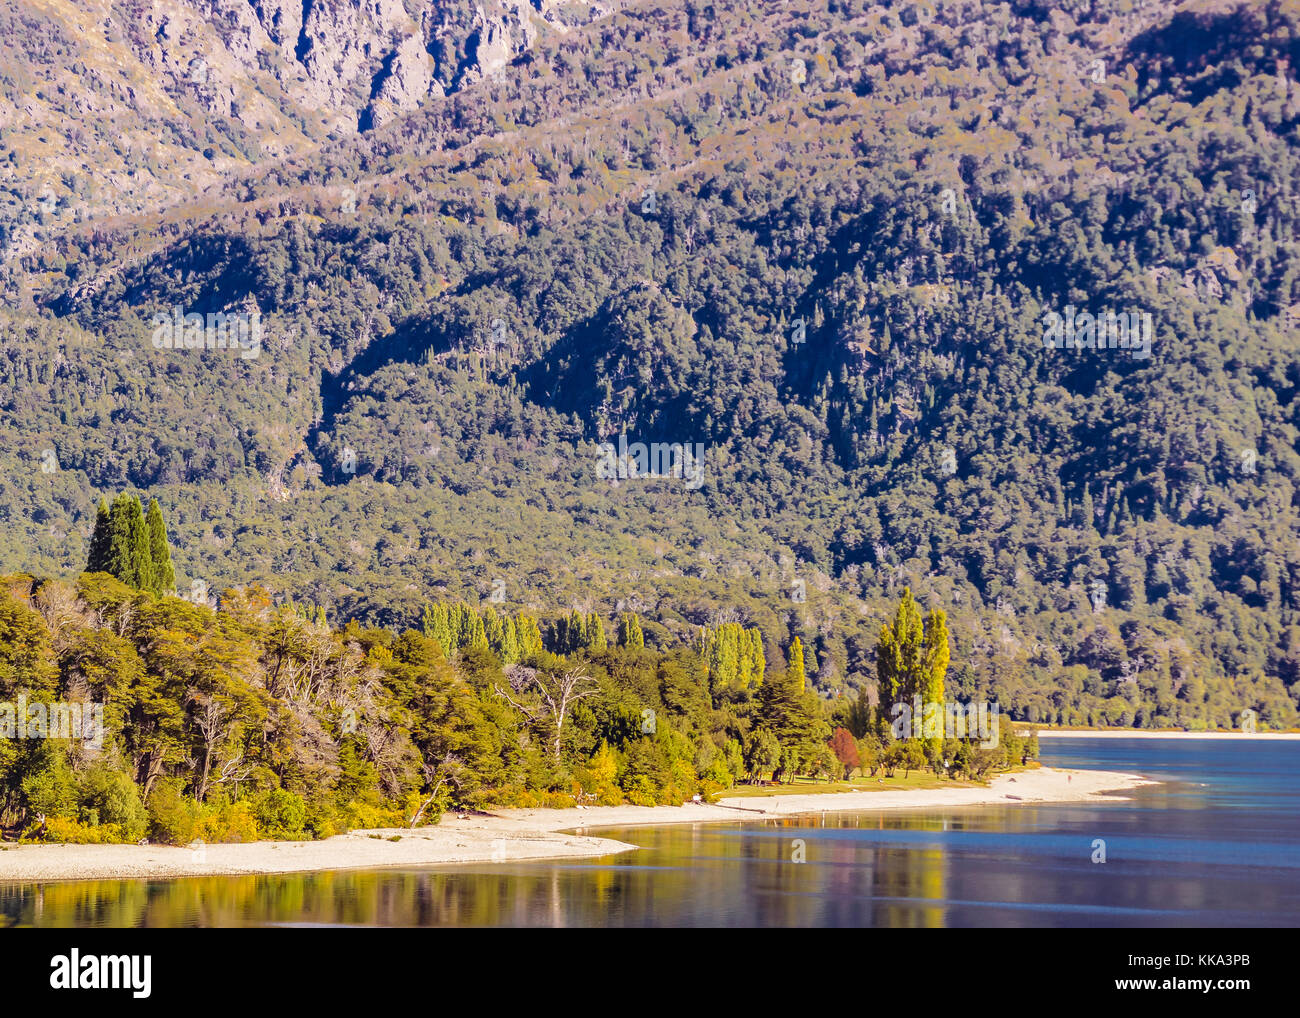 Andes mountains and lake landscape scene at San Carlos de Bariloche, Neuquen province, Argentina Stock Photo